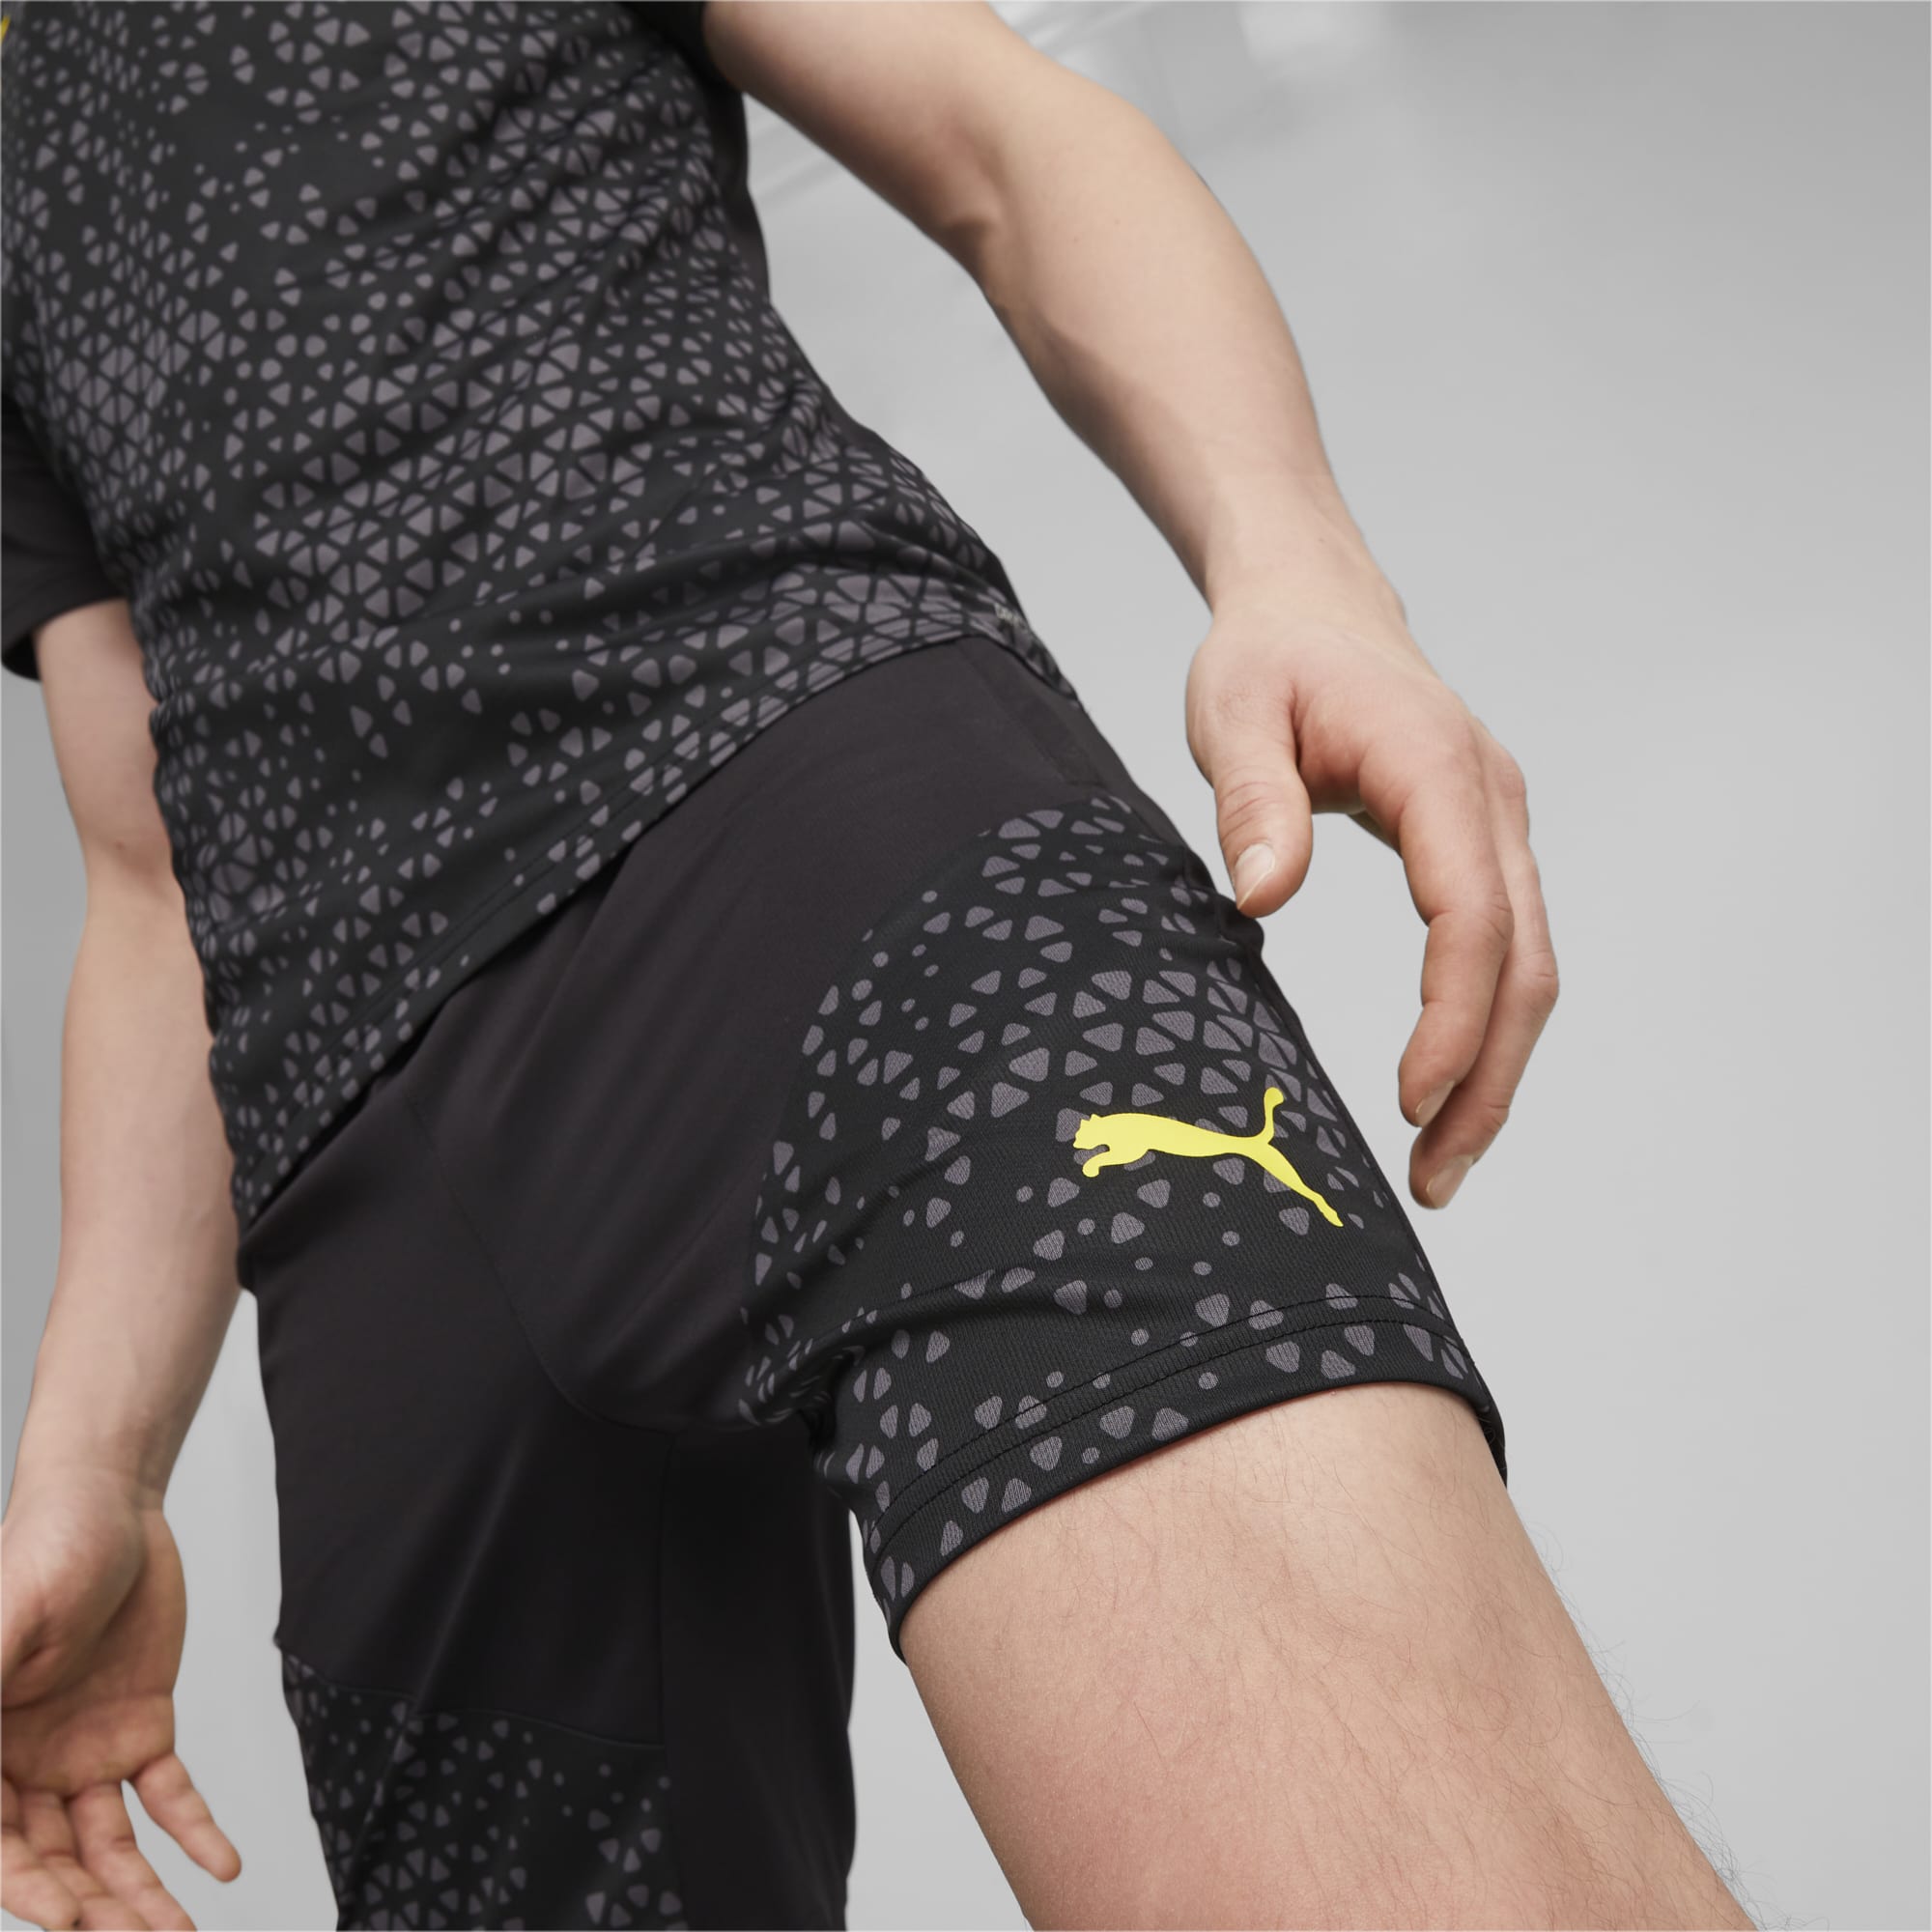 Men's PUMA Borussia Dortmund Football Training Shorts, Black/Cyber Yellow, Size XL, Clothing